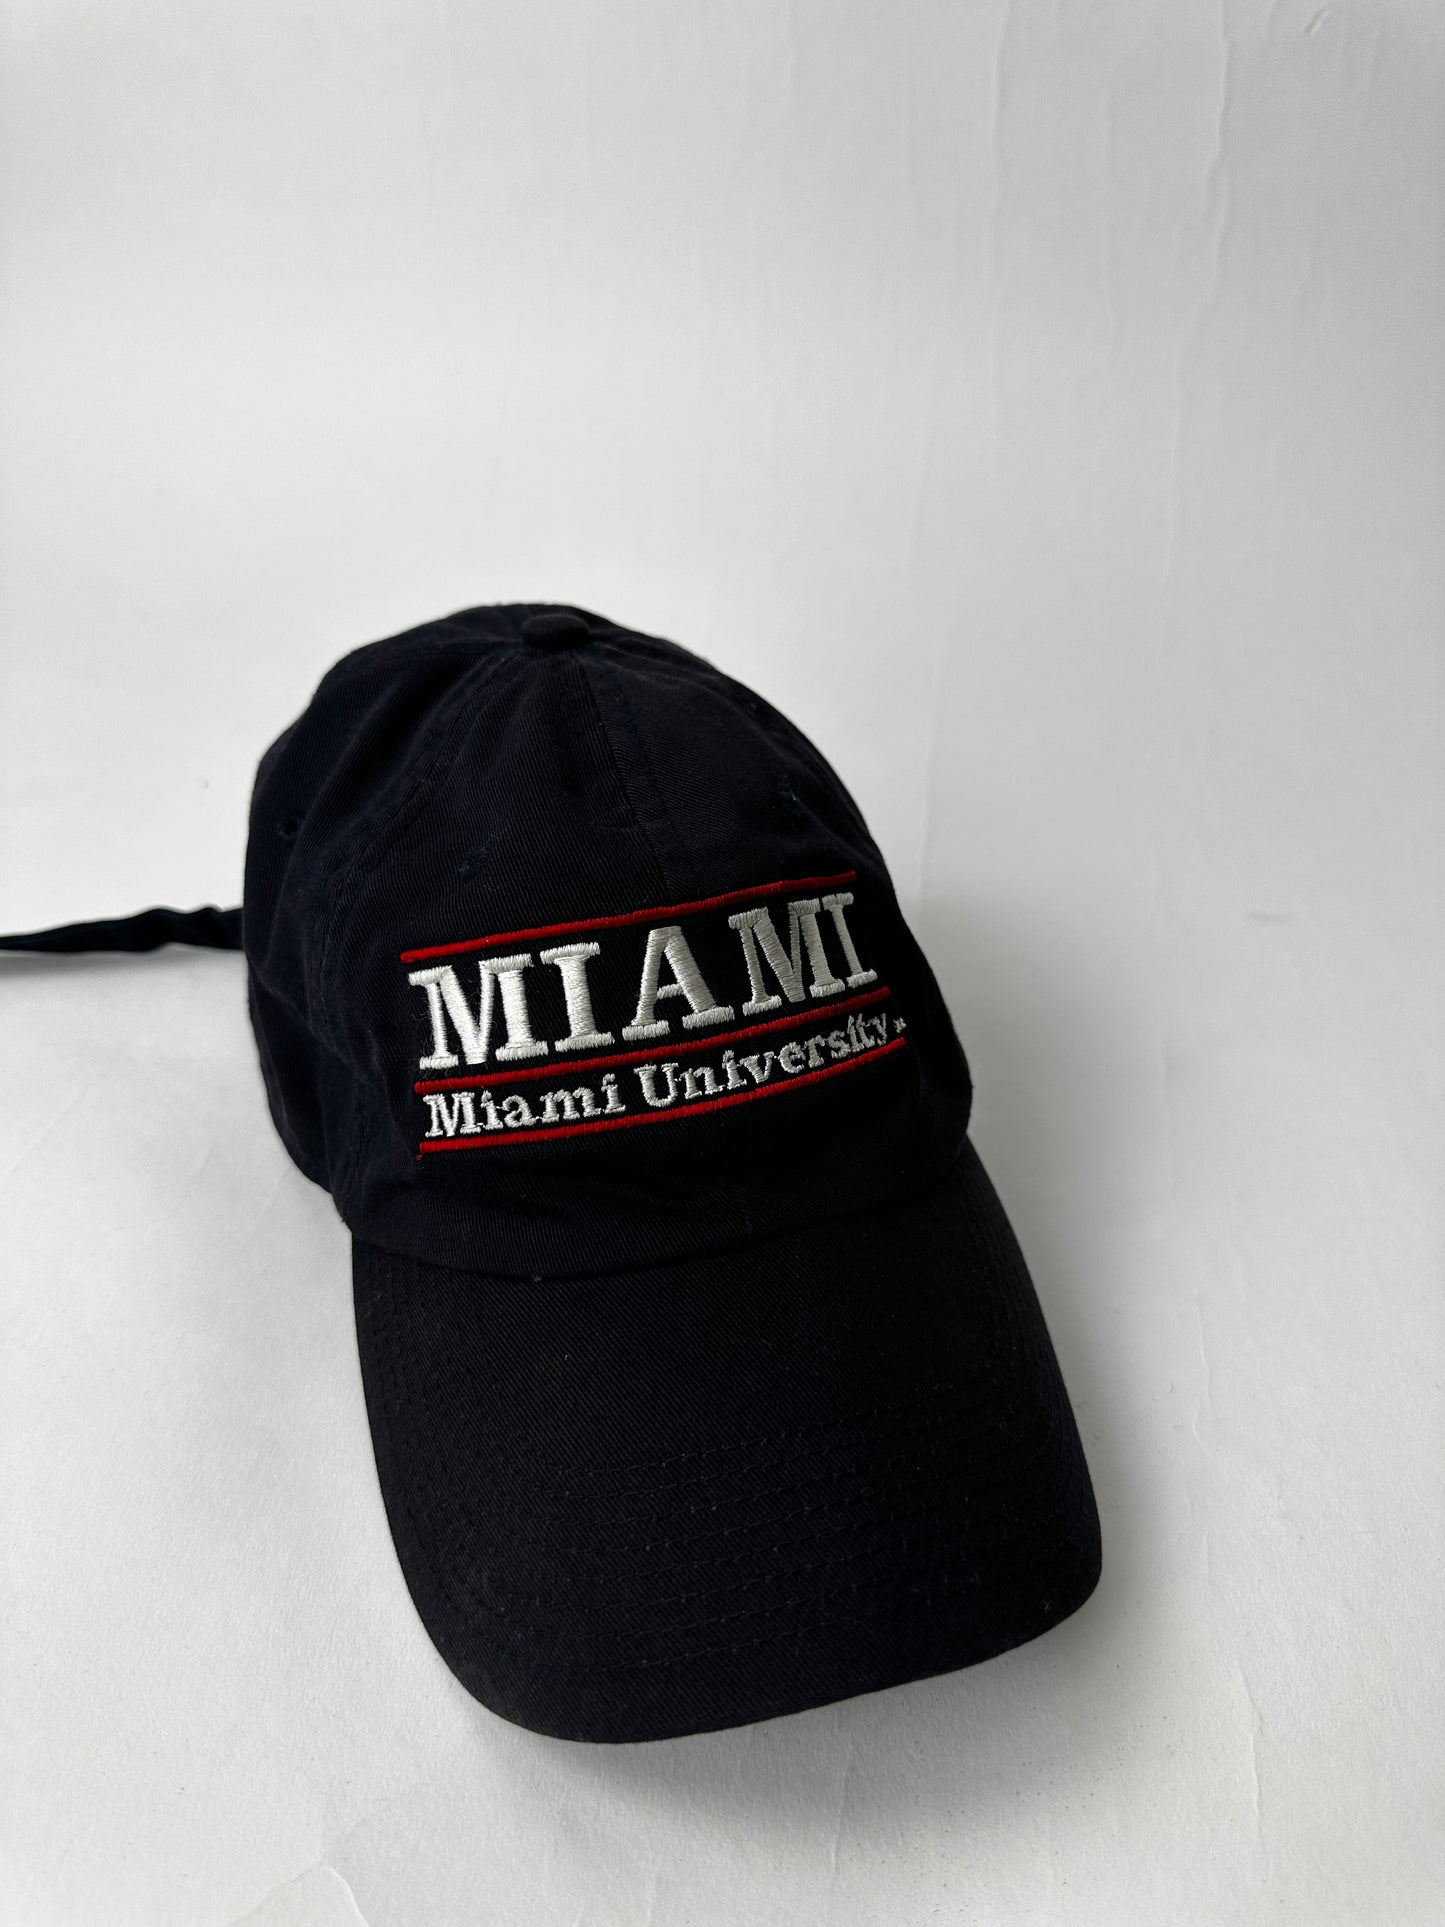 Vintage Miami University Hat Cap Black Strap Back College